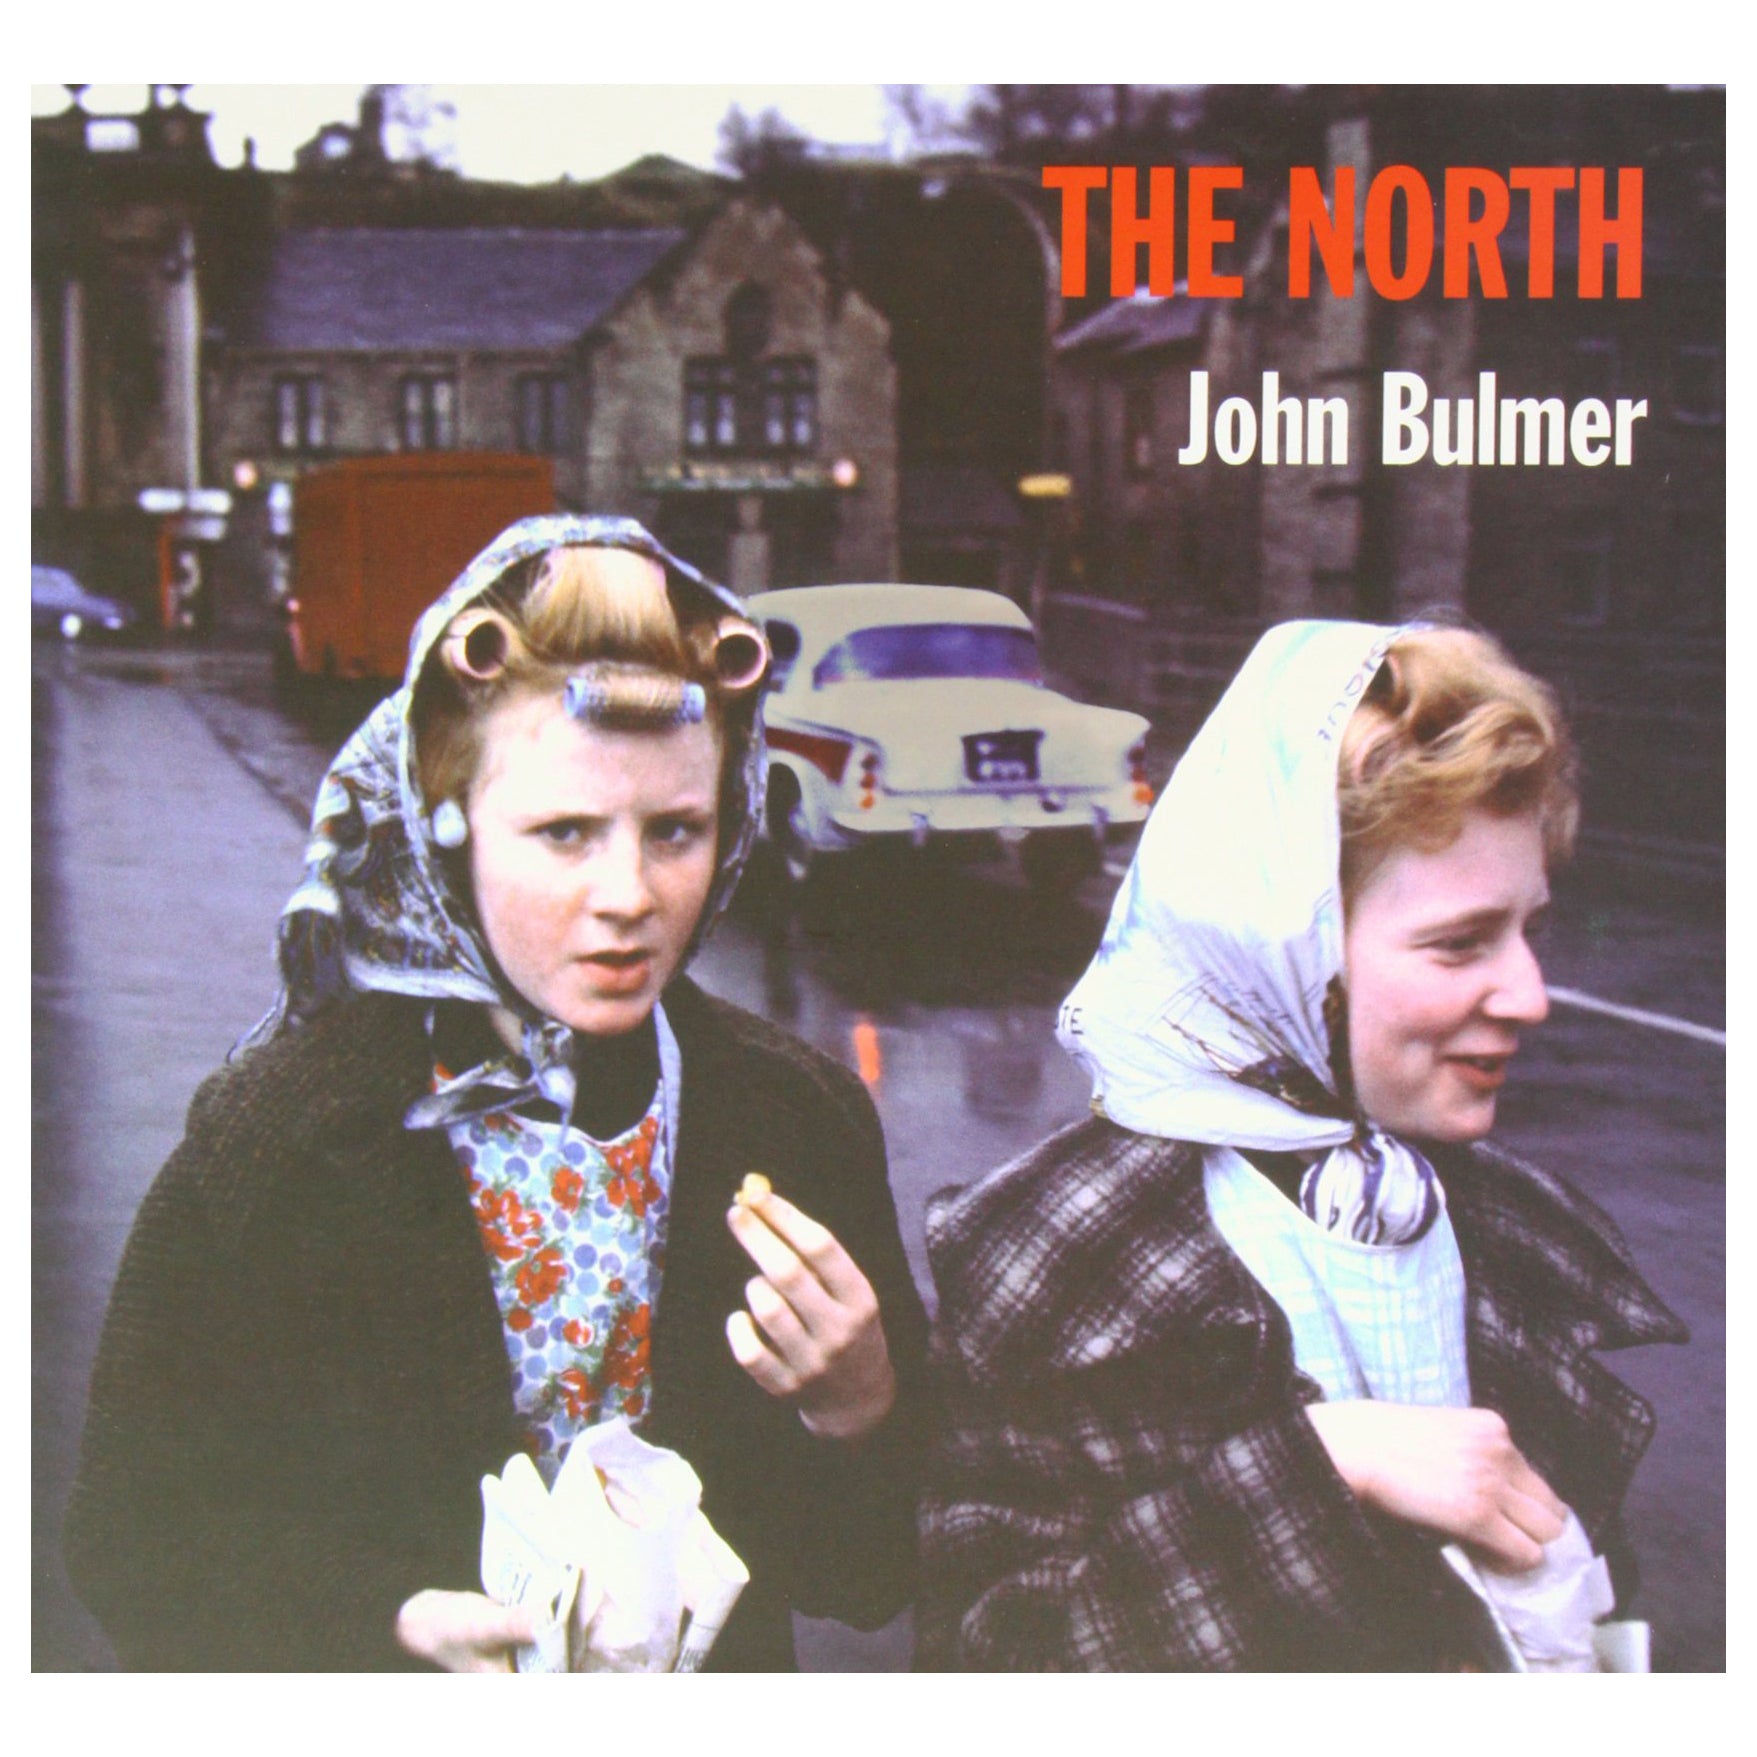 The North by John Bulmer